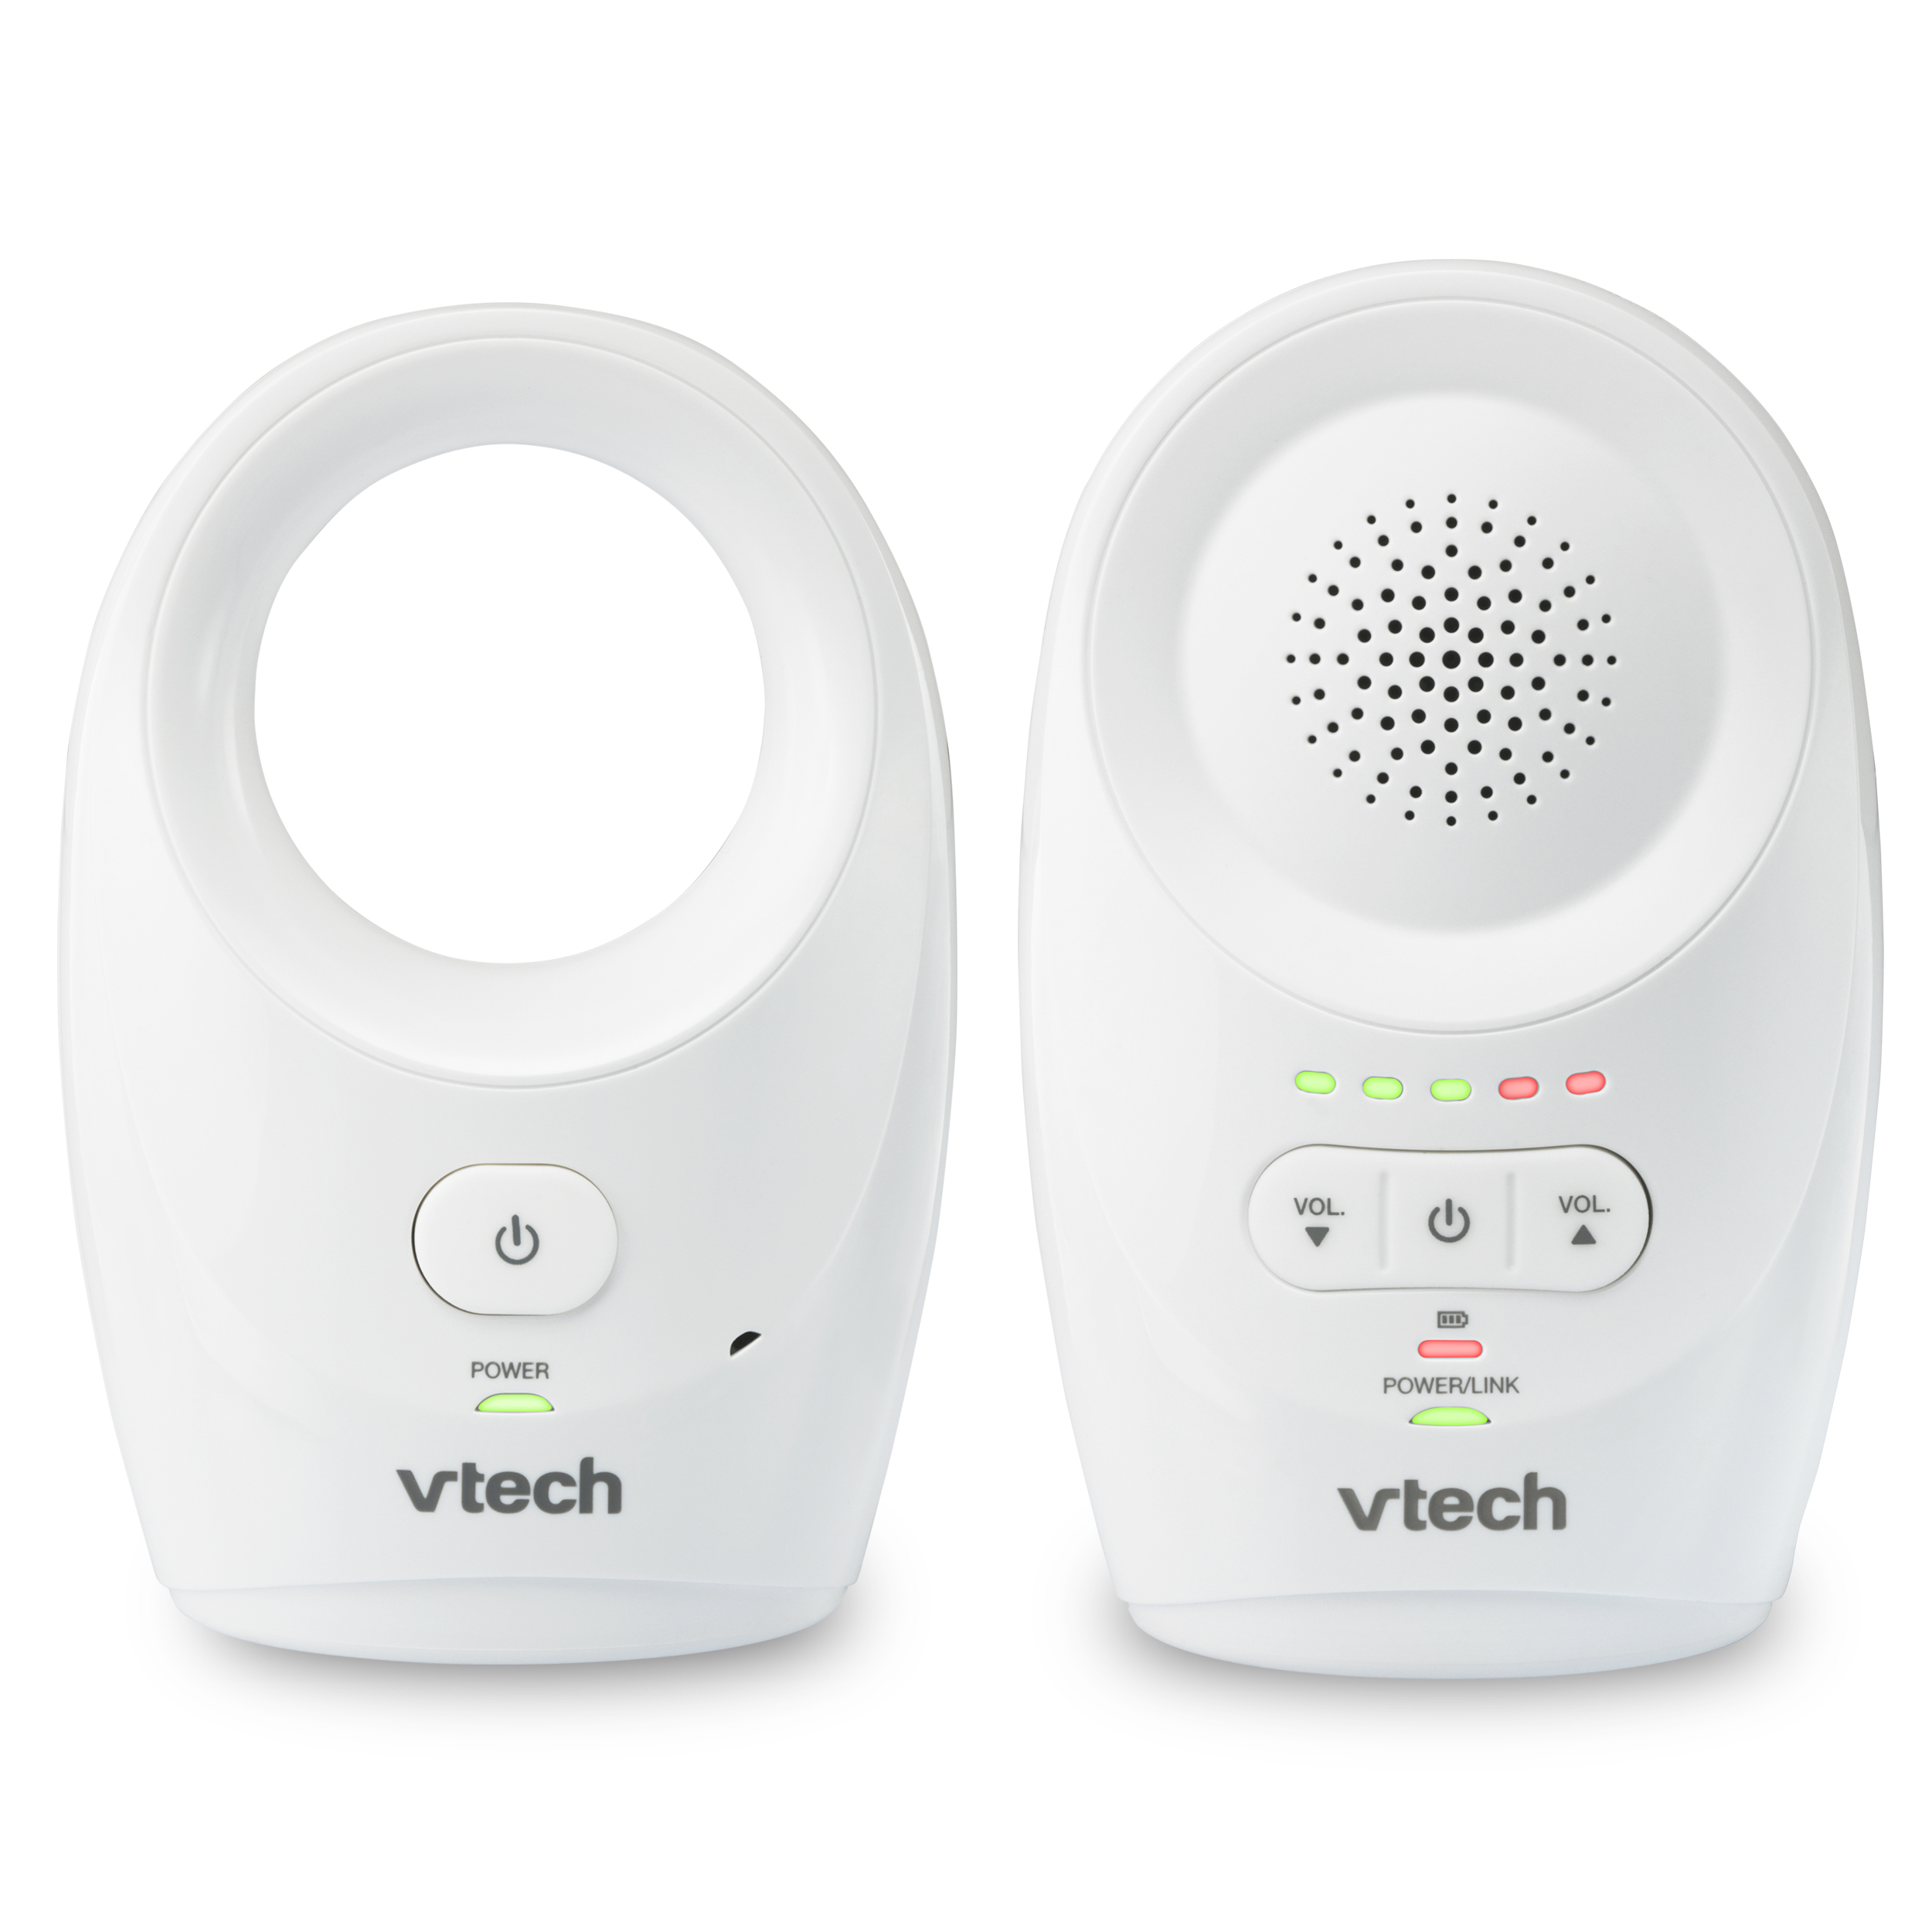 VTech Enhanced Range Digital Audio Baby Monitor with 1 Parent Unit, DM1111, White - image 1 of 21